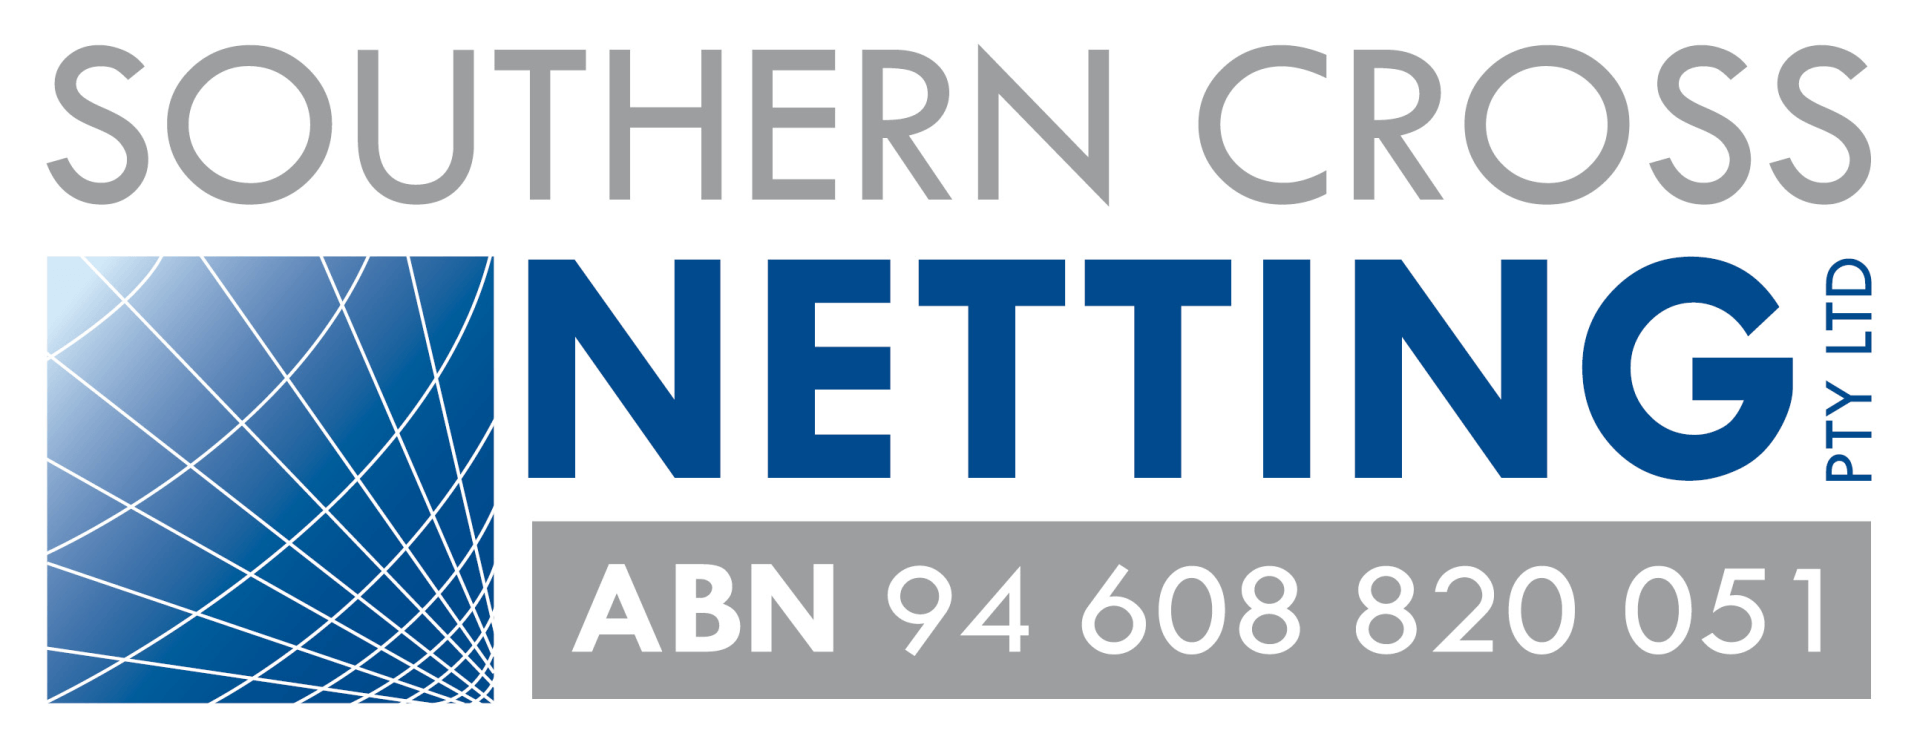 Southern-Cross-Nettin-Logo